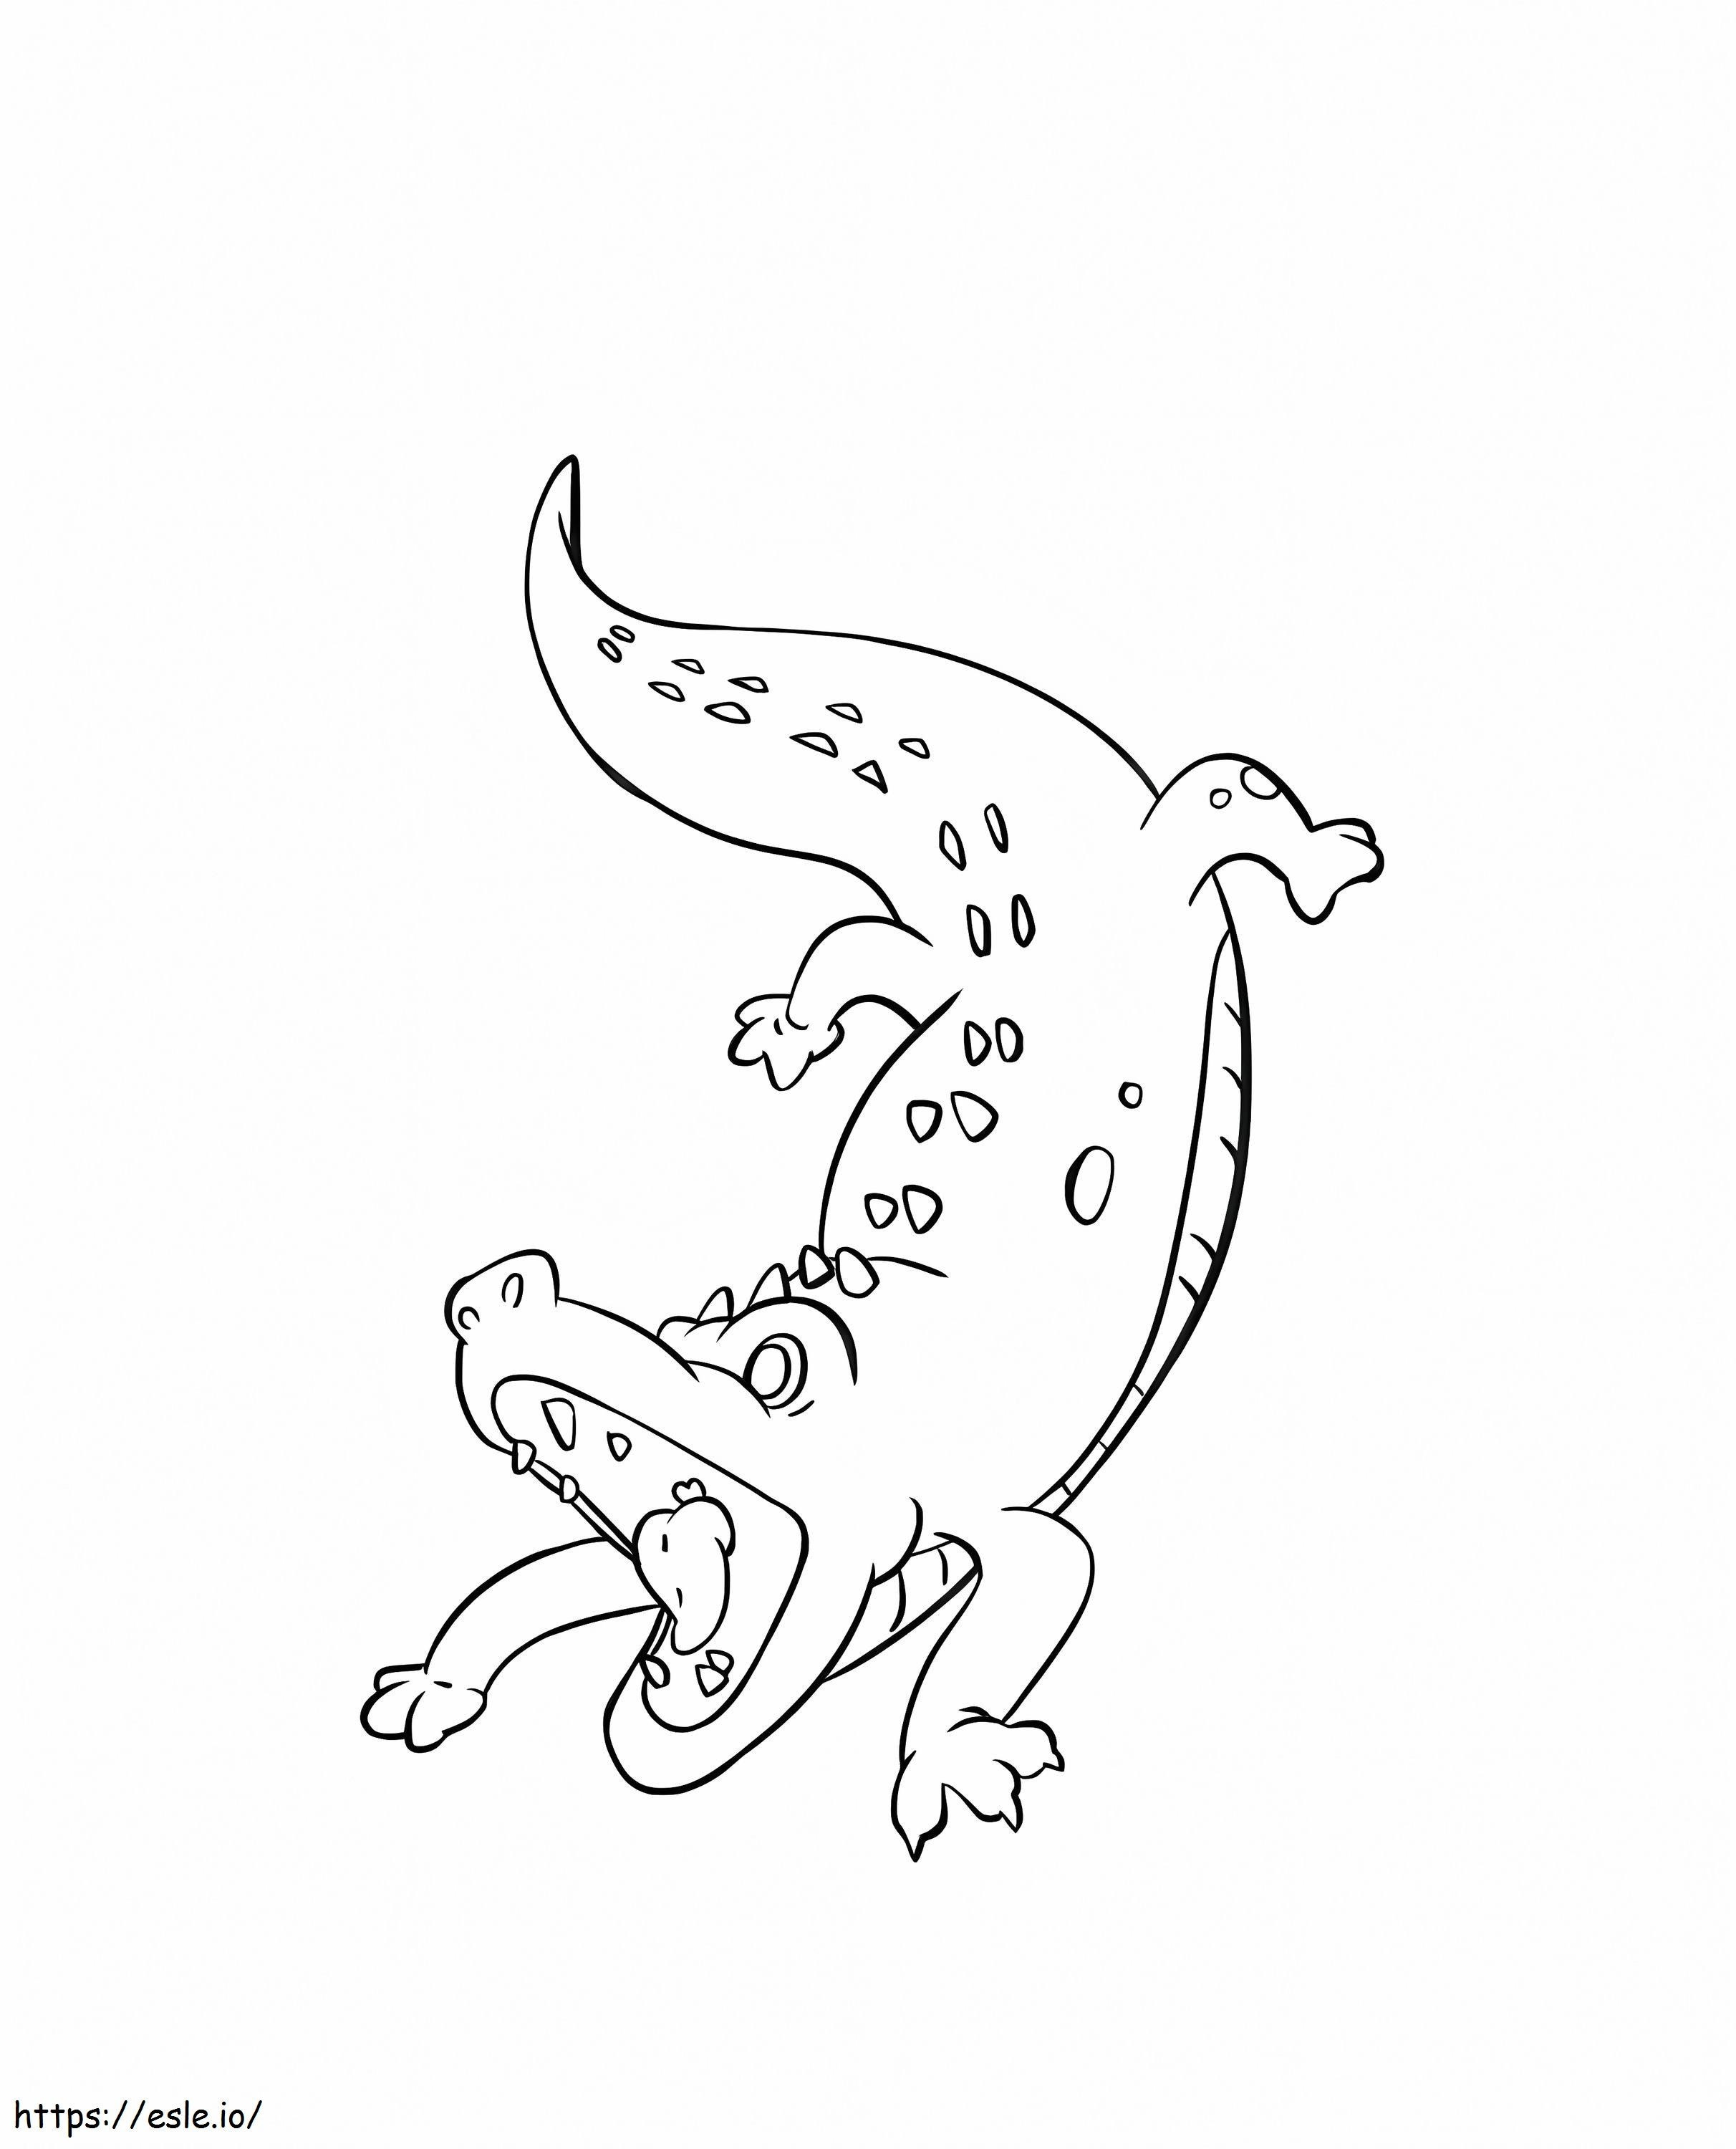 Coloriage Crocodile gratuit à imprimer dessin